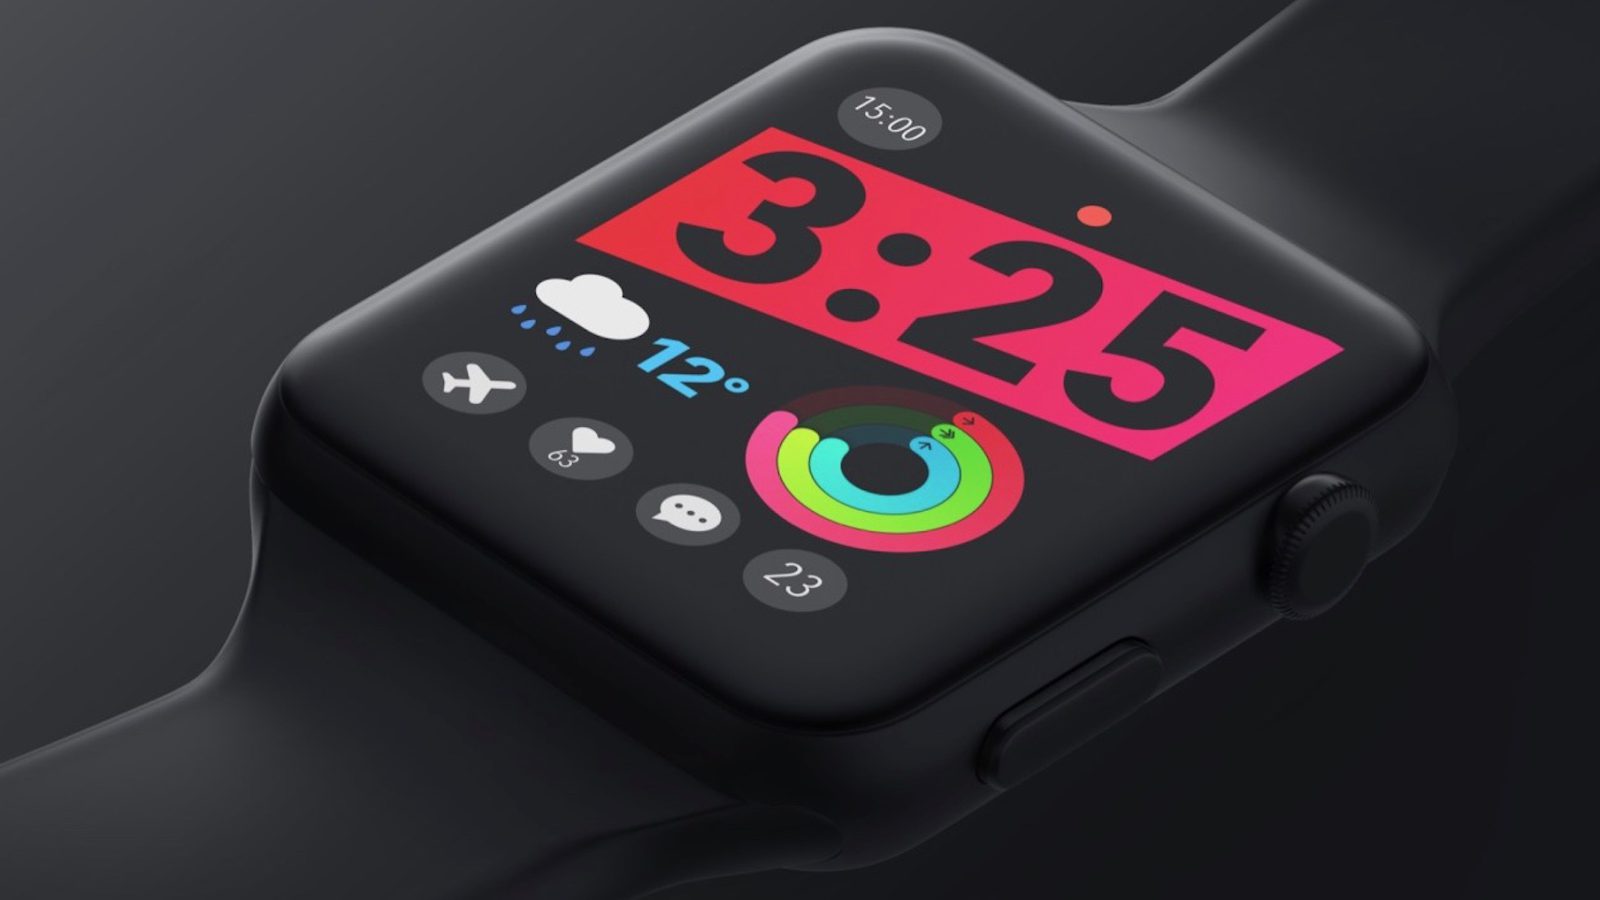 Apple Watch - watchOS 5